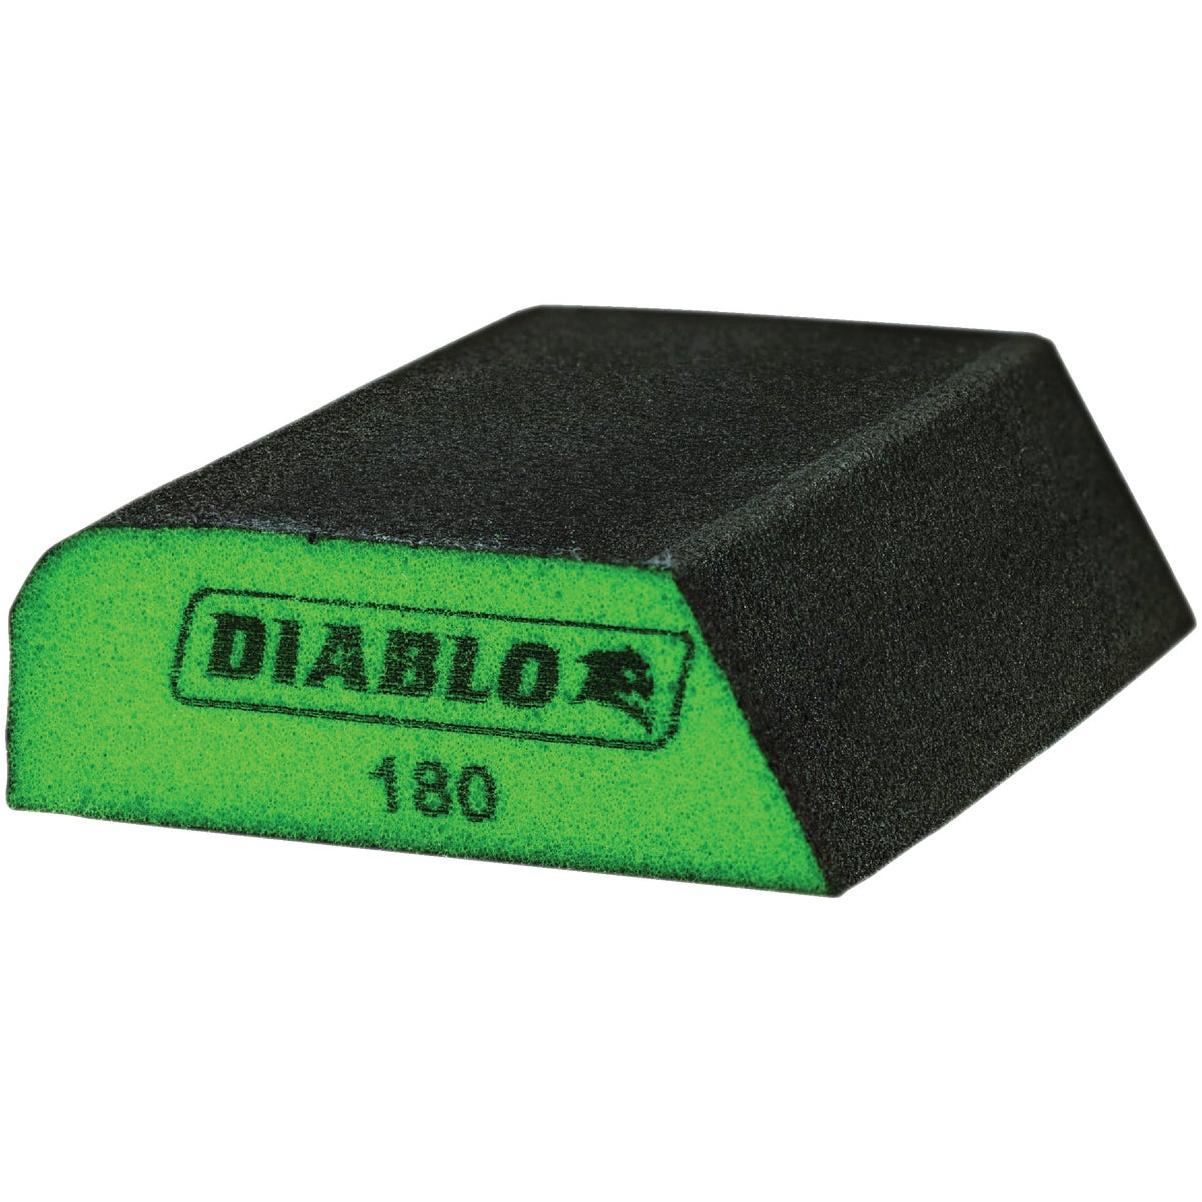 Diablo MegaMouse 80-Grit Sandpaper (5-Pack)